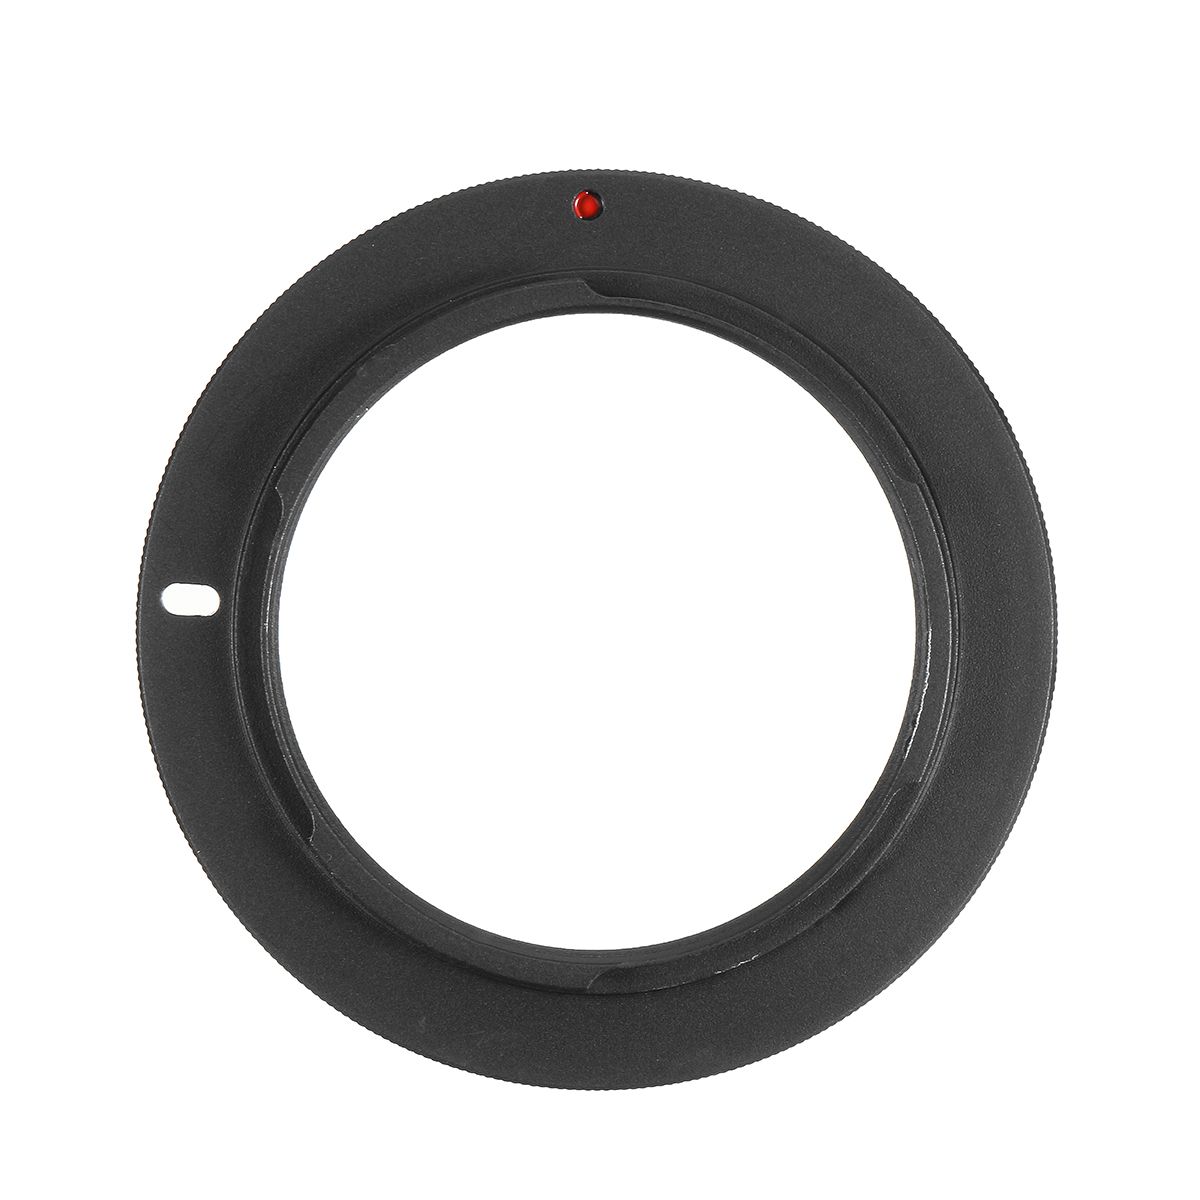 Adapter-Ring-for-M42-Lens-To-AI-Lenses-Nikon-F-D70s-D3100-D100-D7000-D5100-D80-1131531